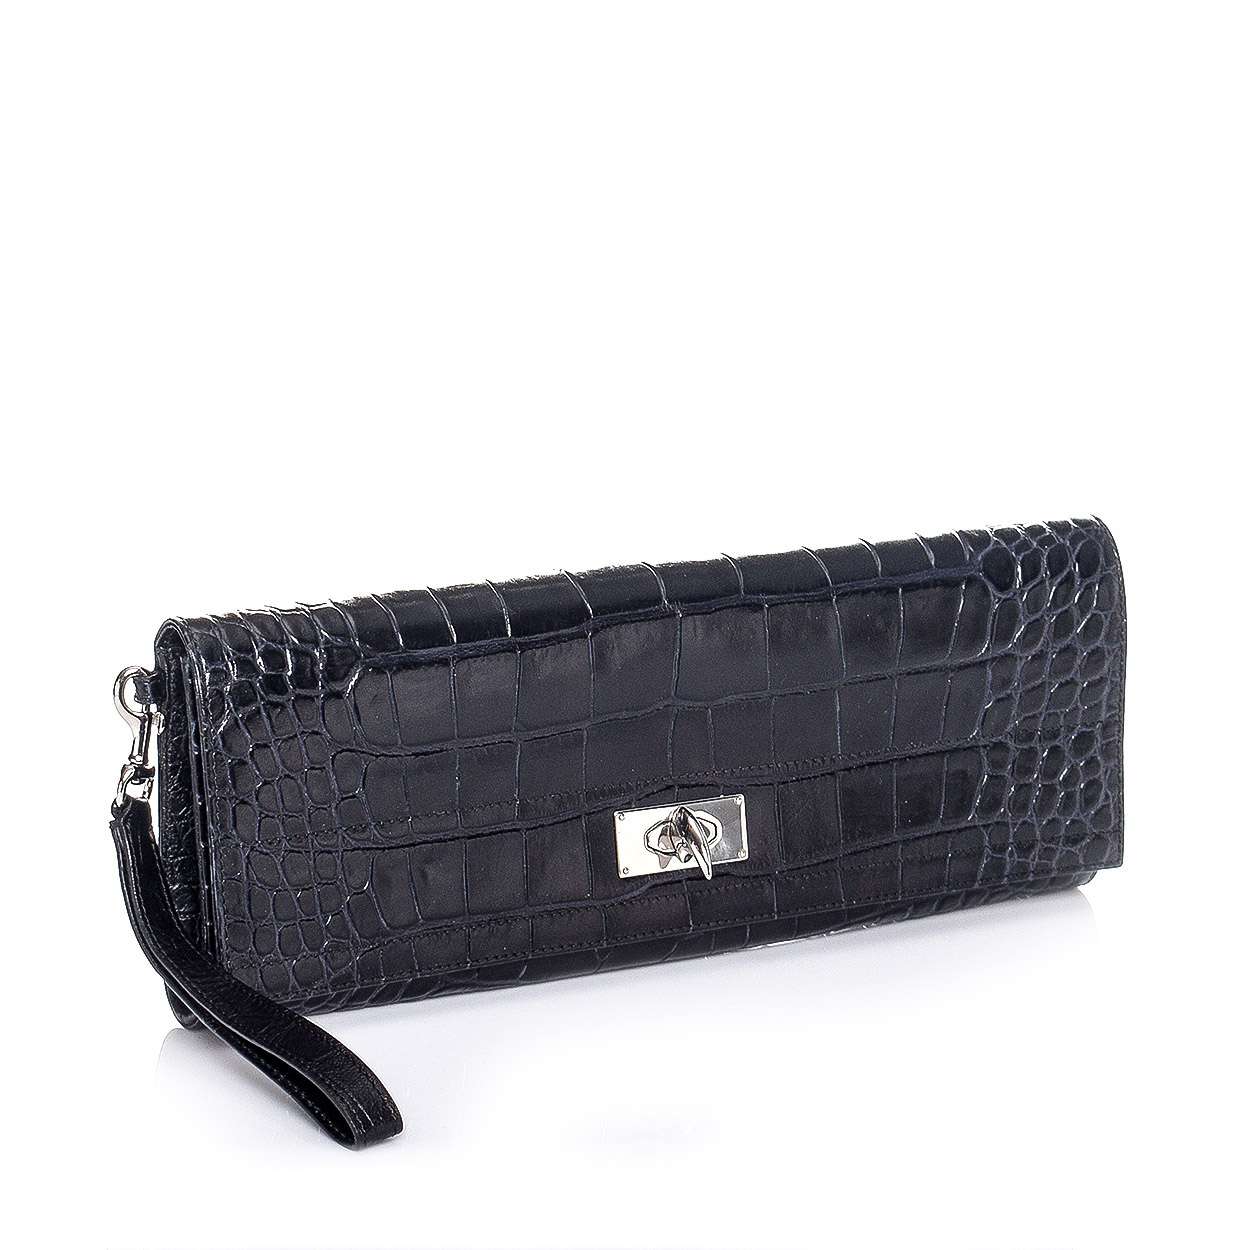 Givenchy - Black Croc Print Leather Clutch Bag